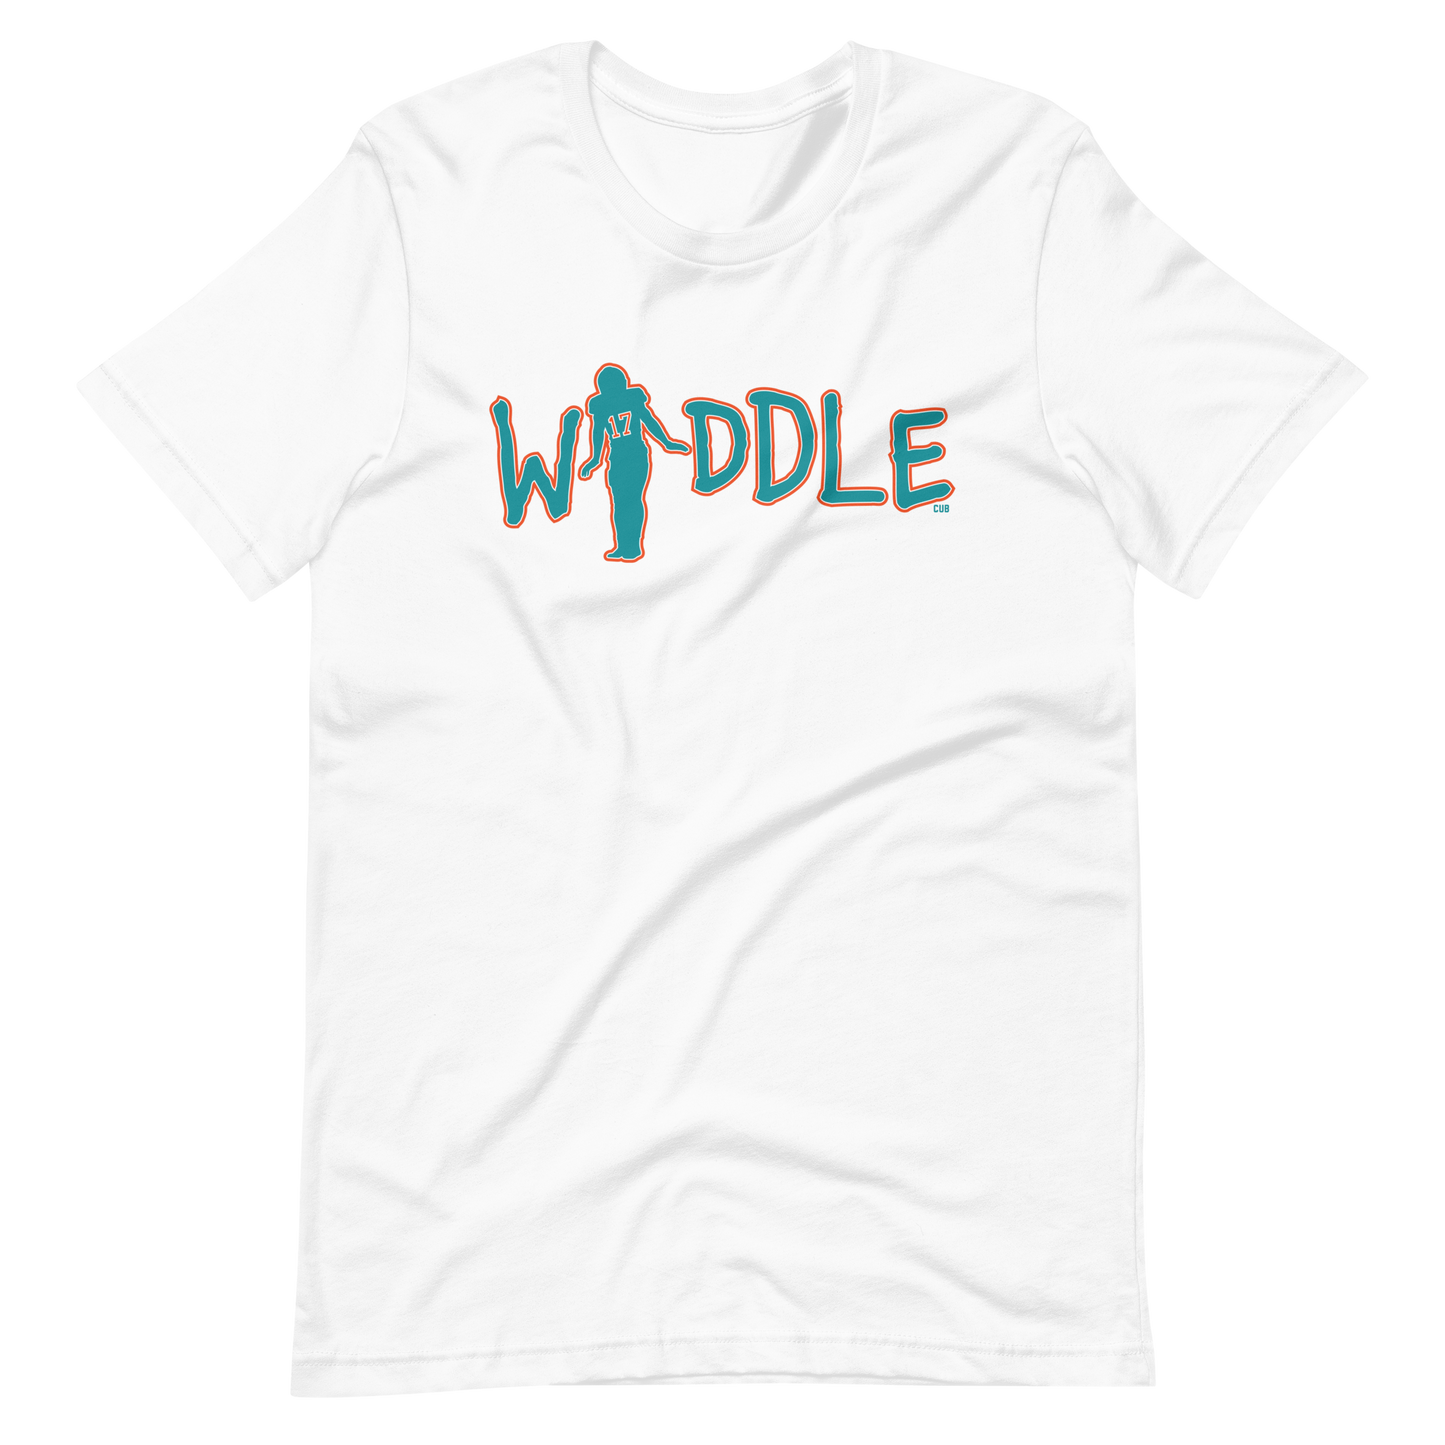 Waddle T-Shirt